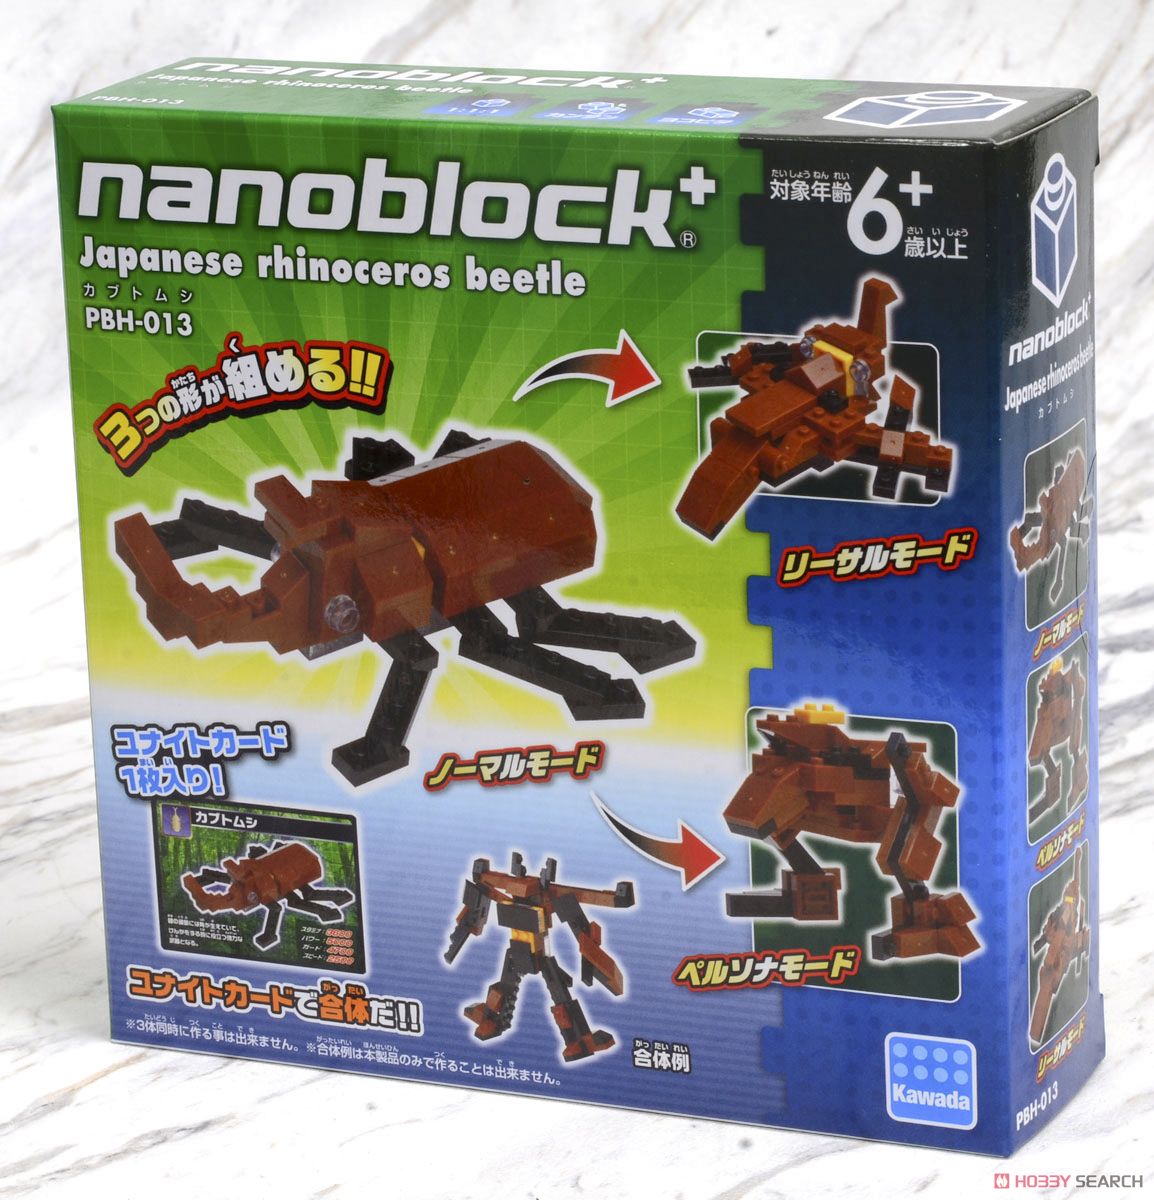 nanoblock+ カブトムシ (ブロック) パッケージ1